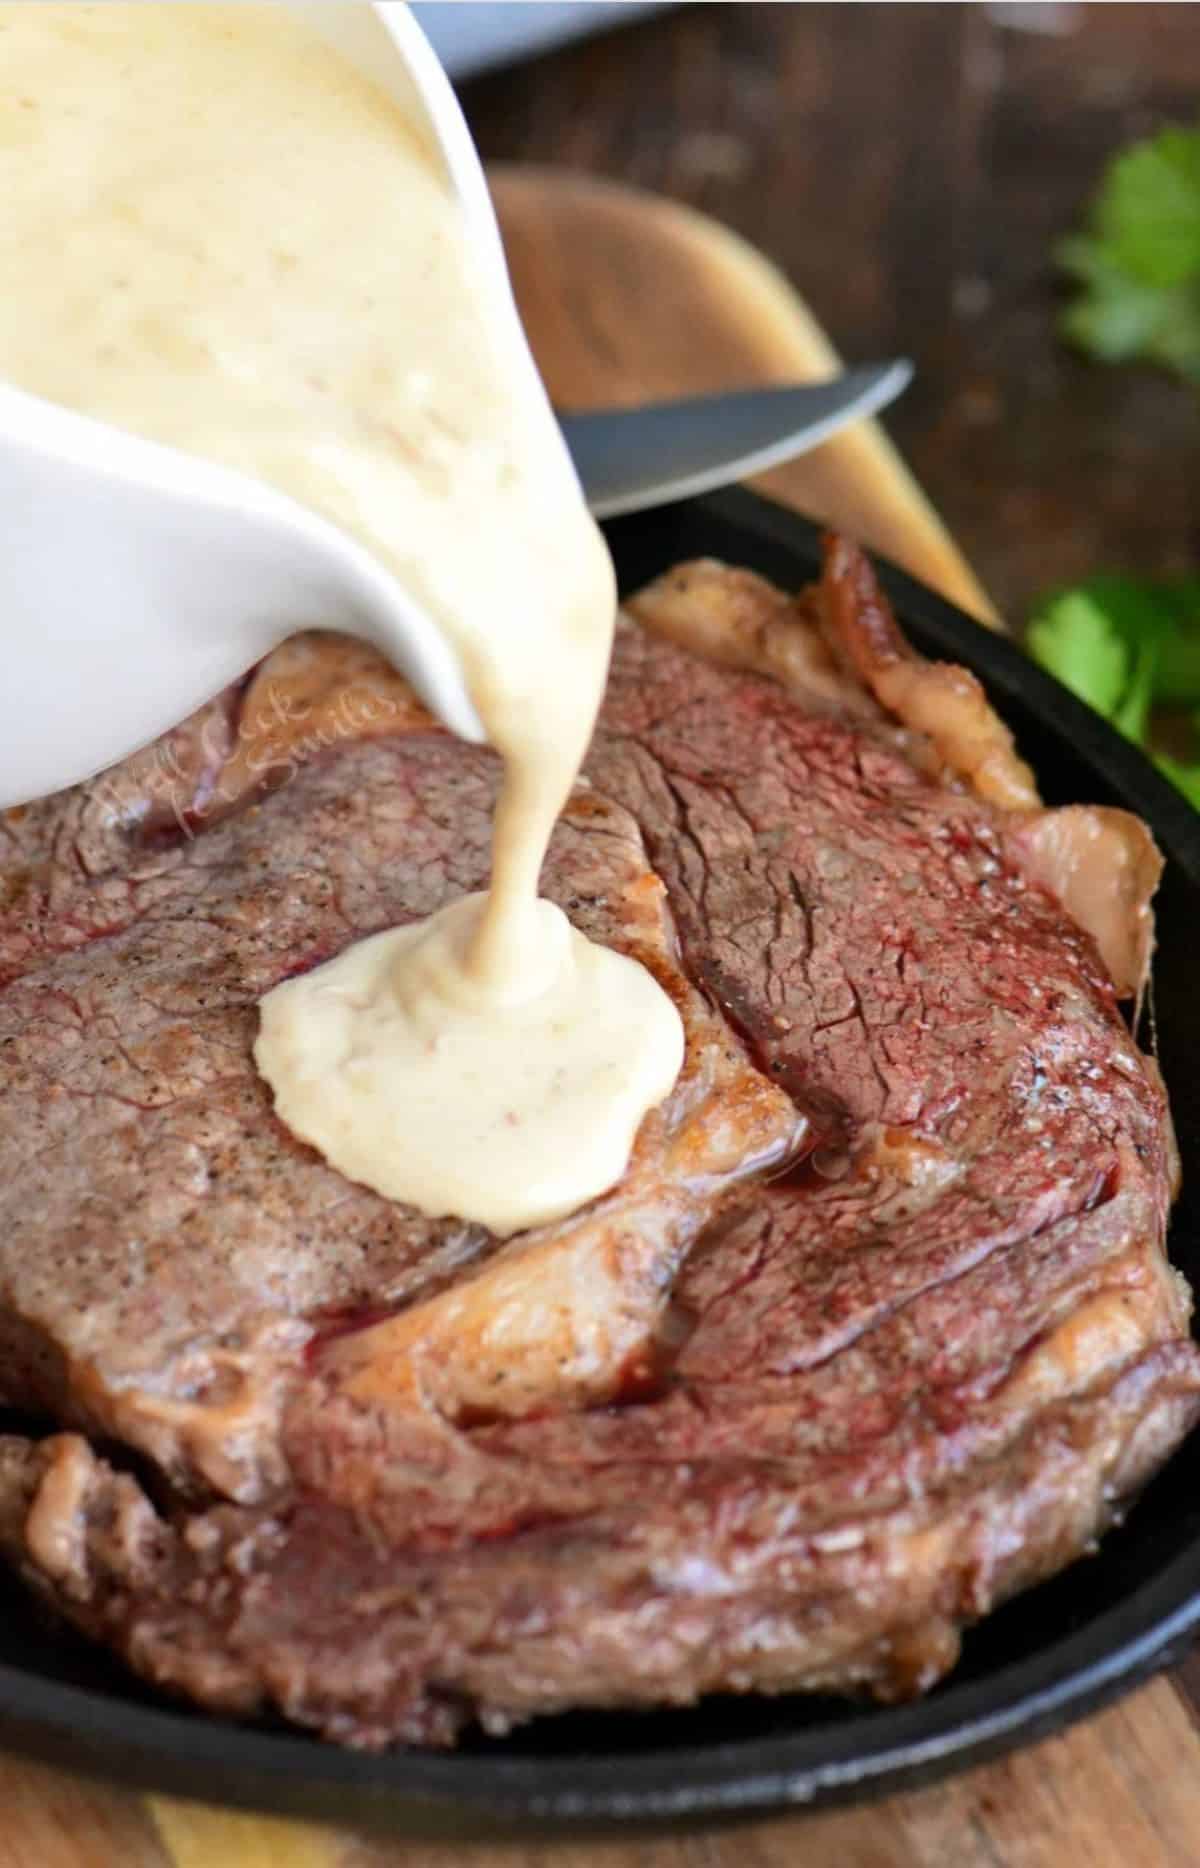 pouring creamy steak sauce over the seared ribeye steak.